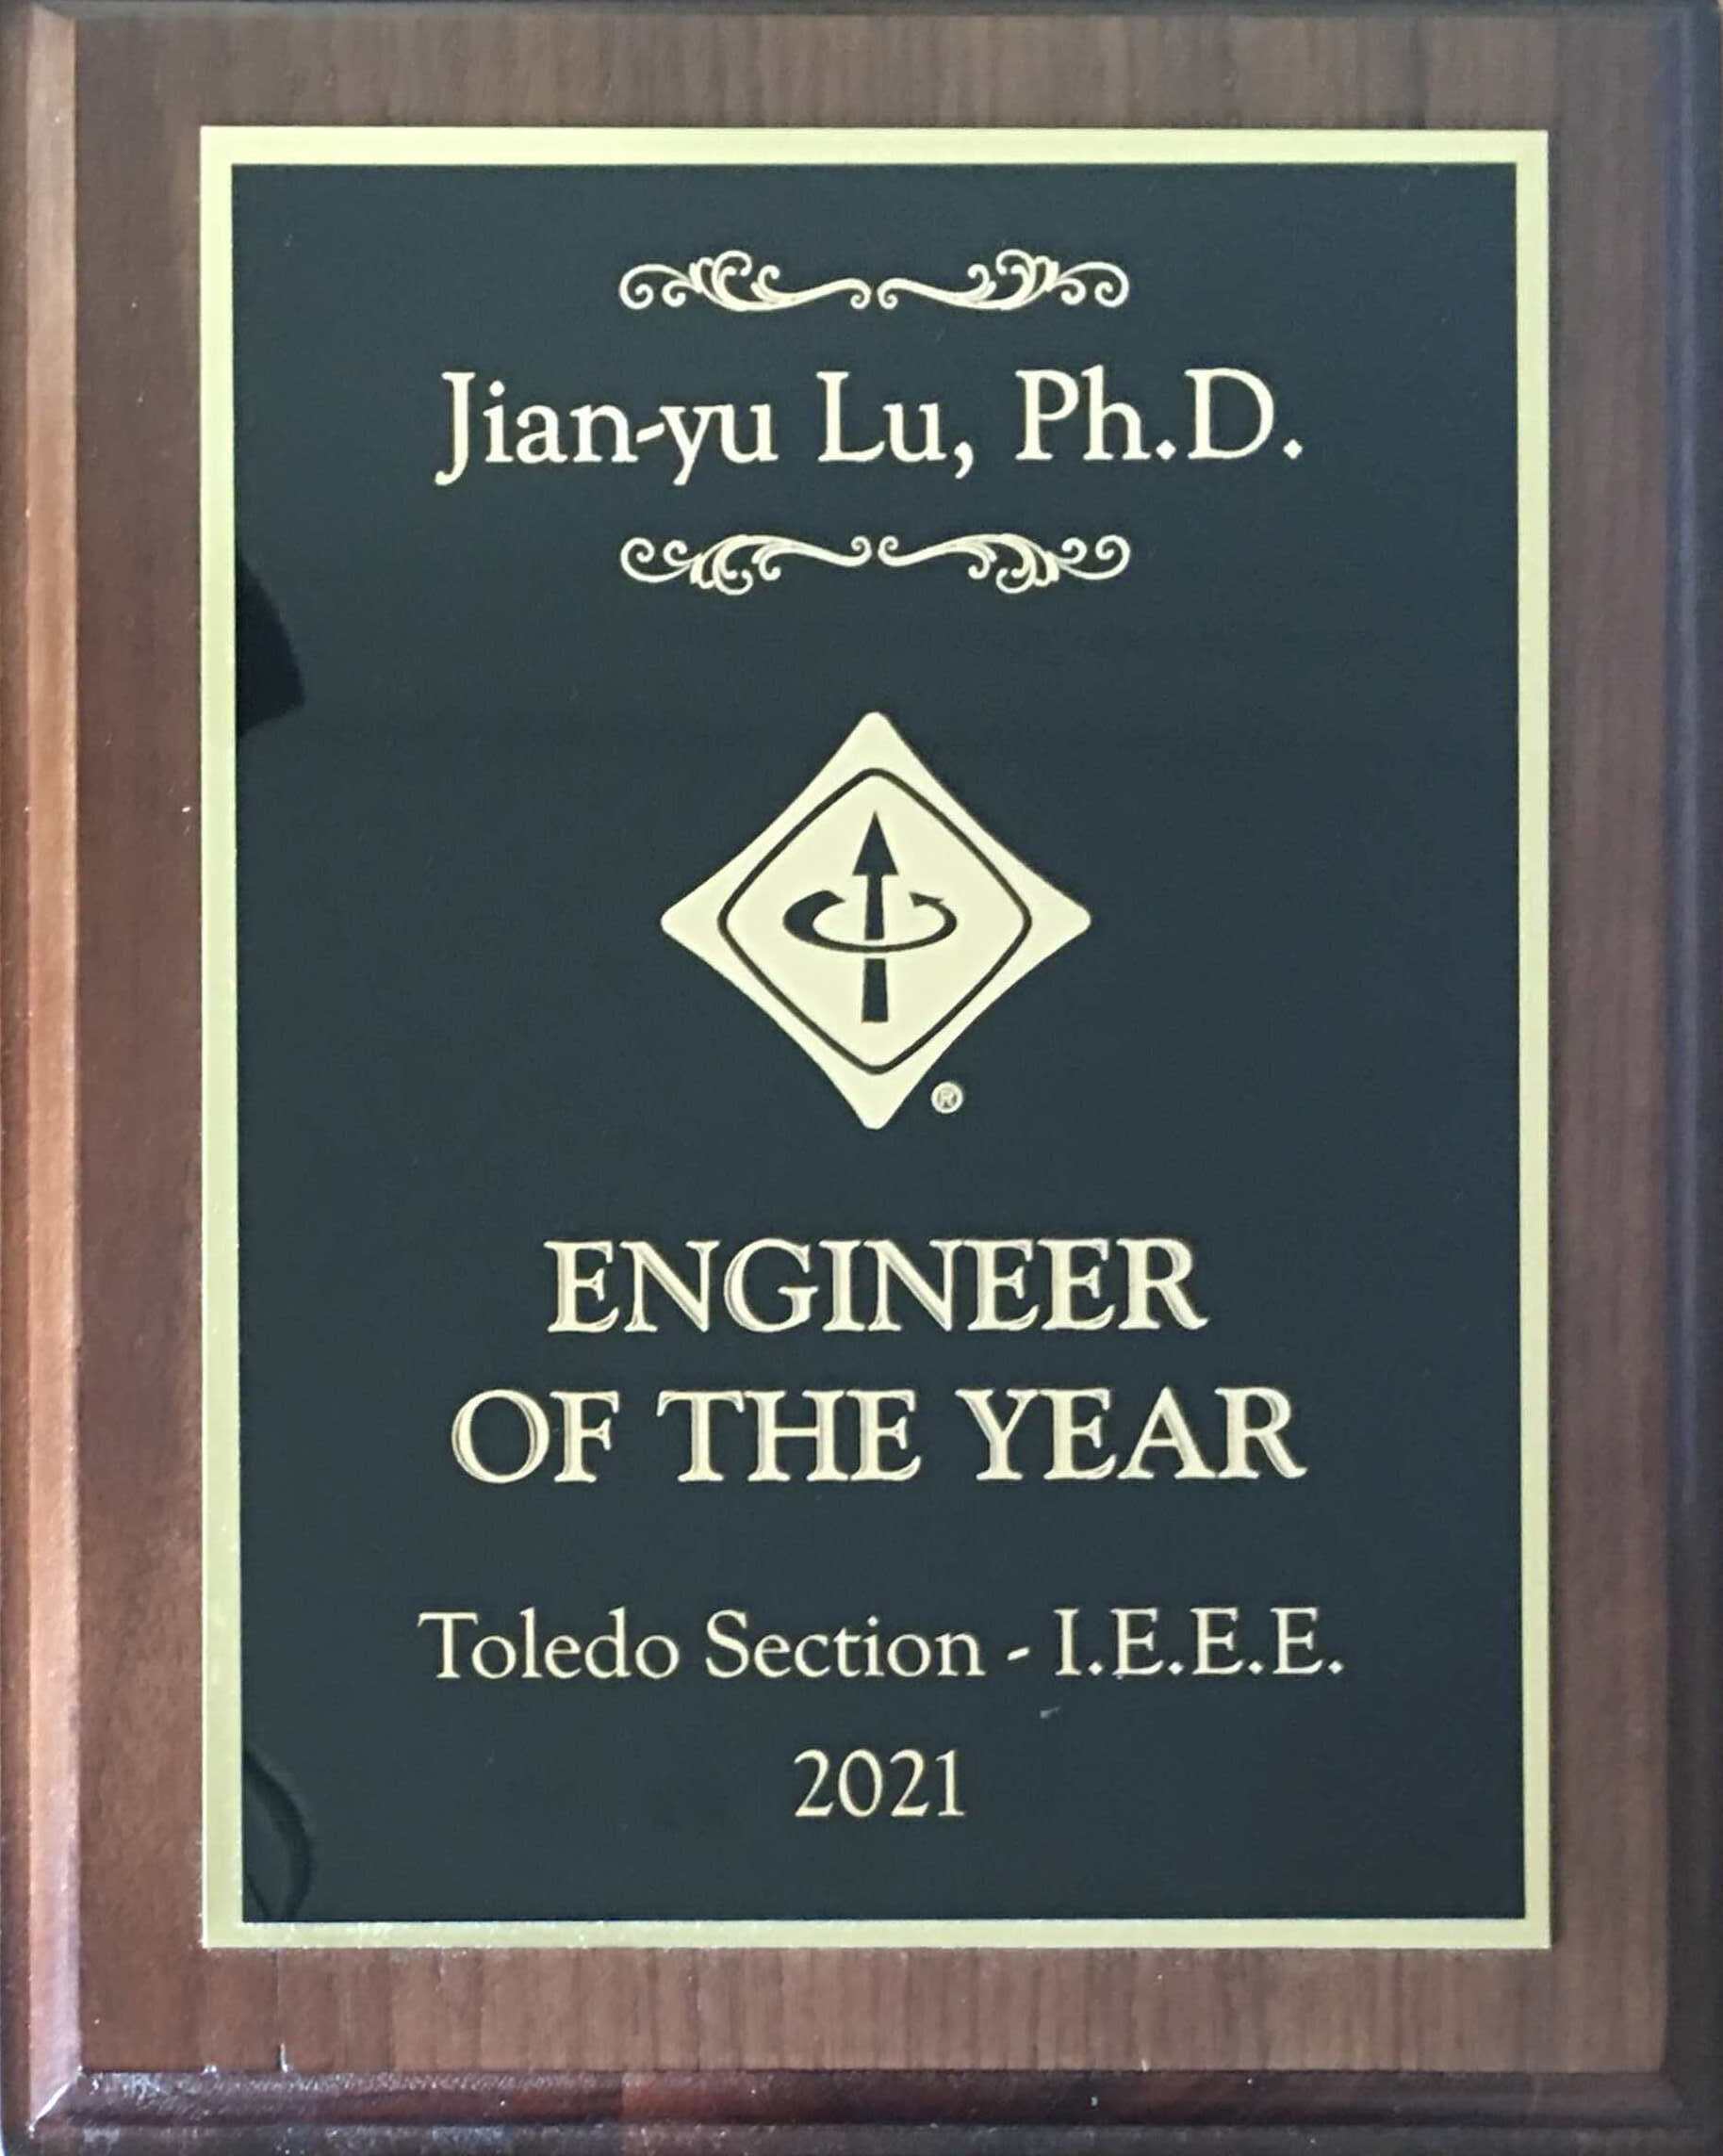  * 2021 IEEE Toledo Section Engineering of the Year Award * 